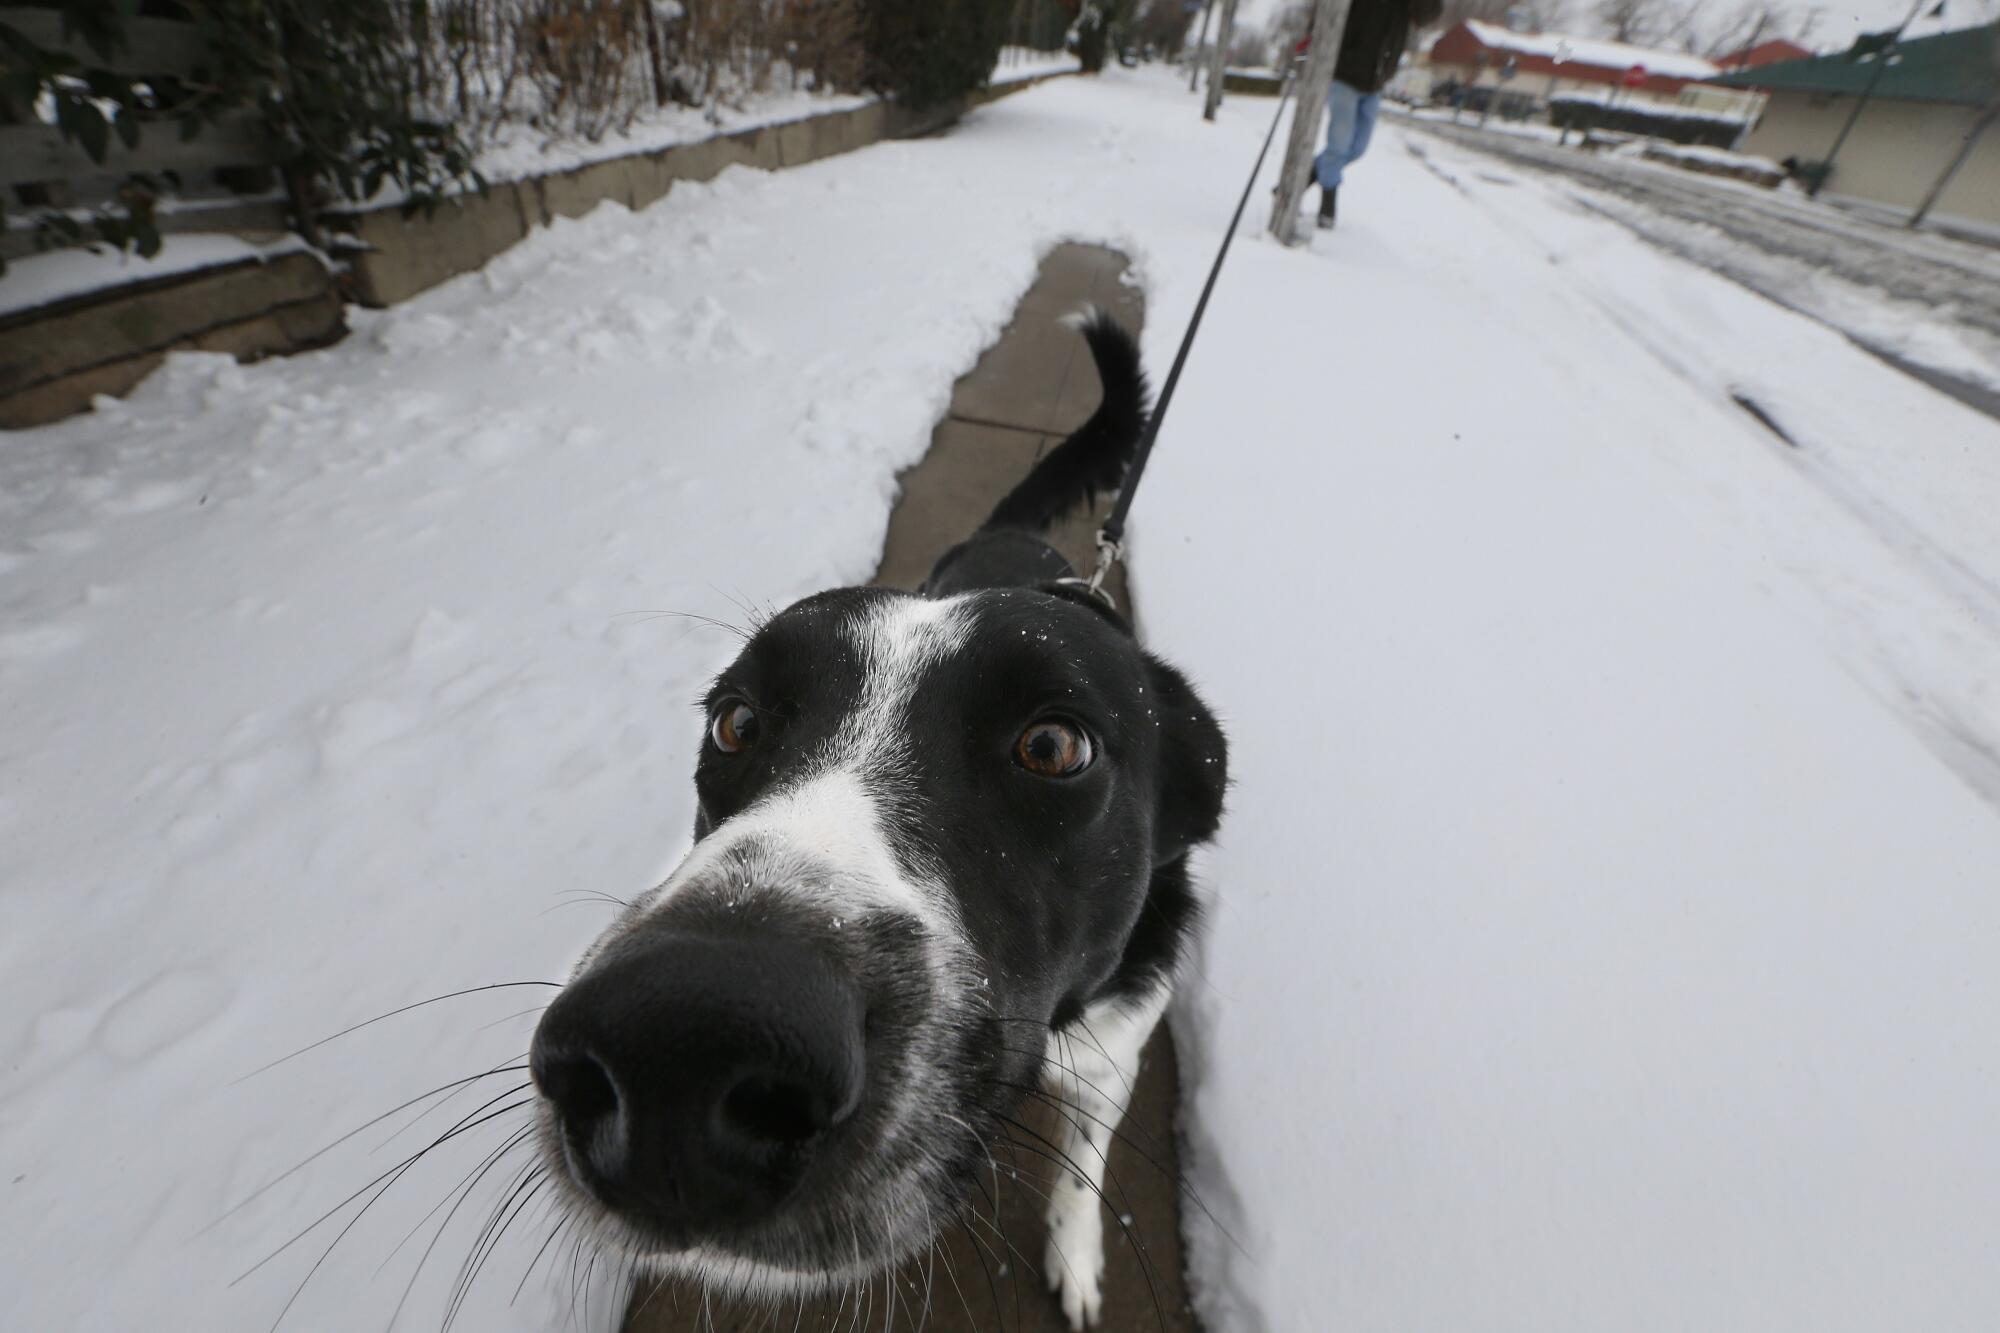 A dog walks on snowy pavement